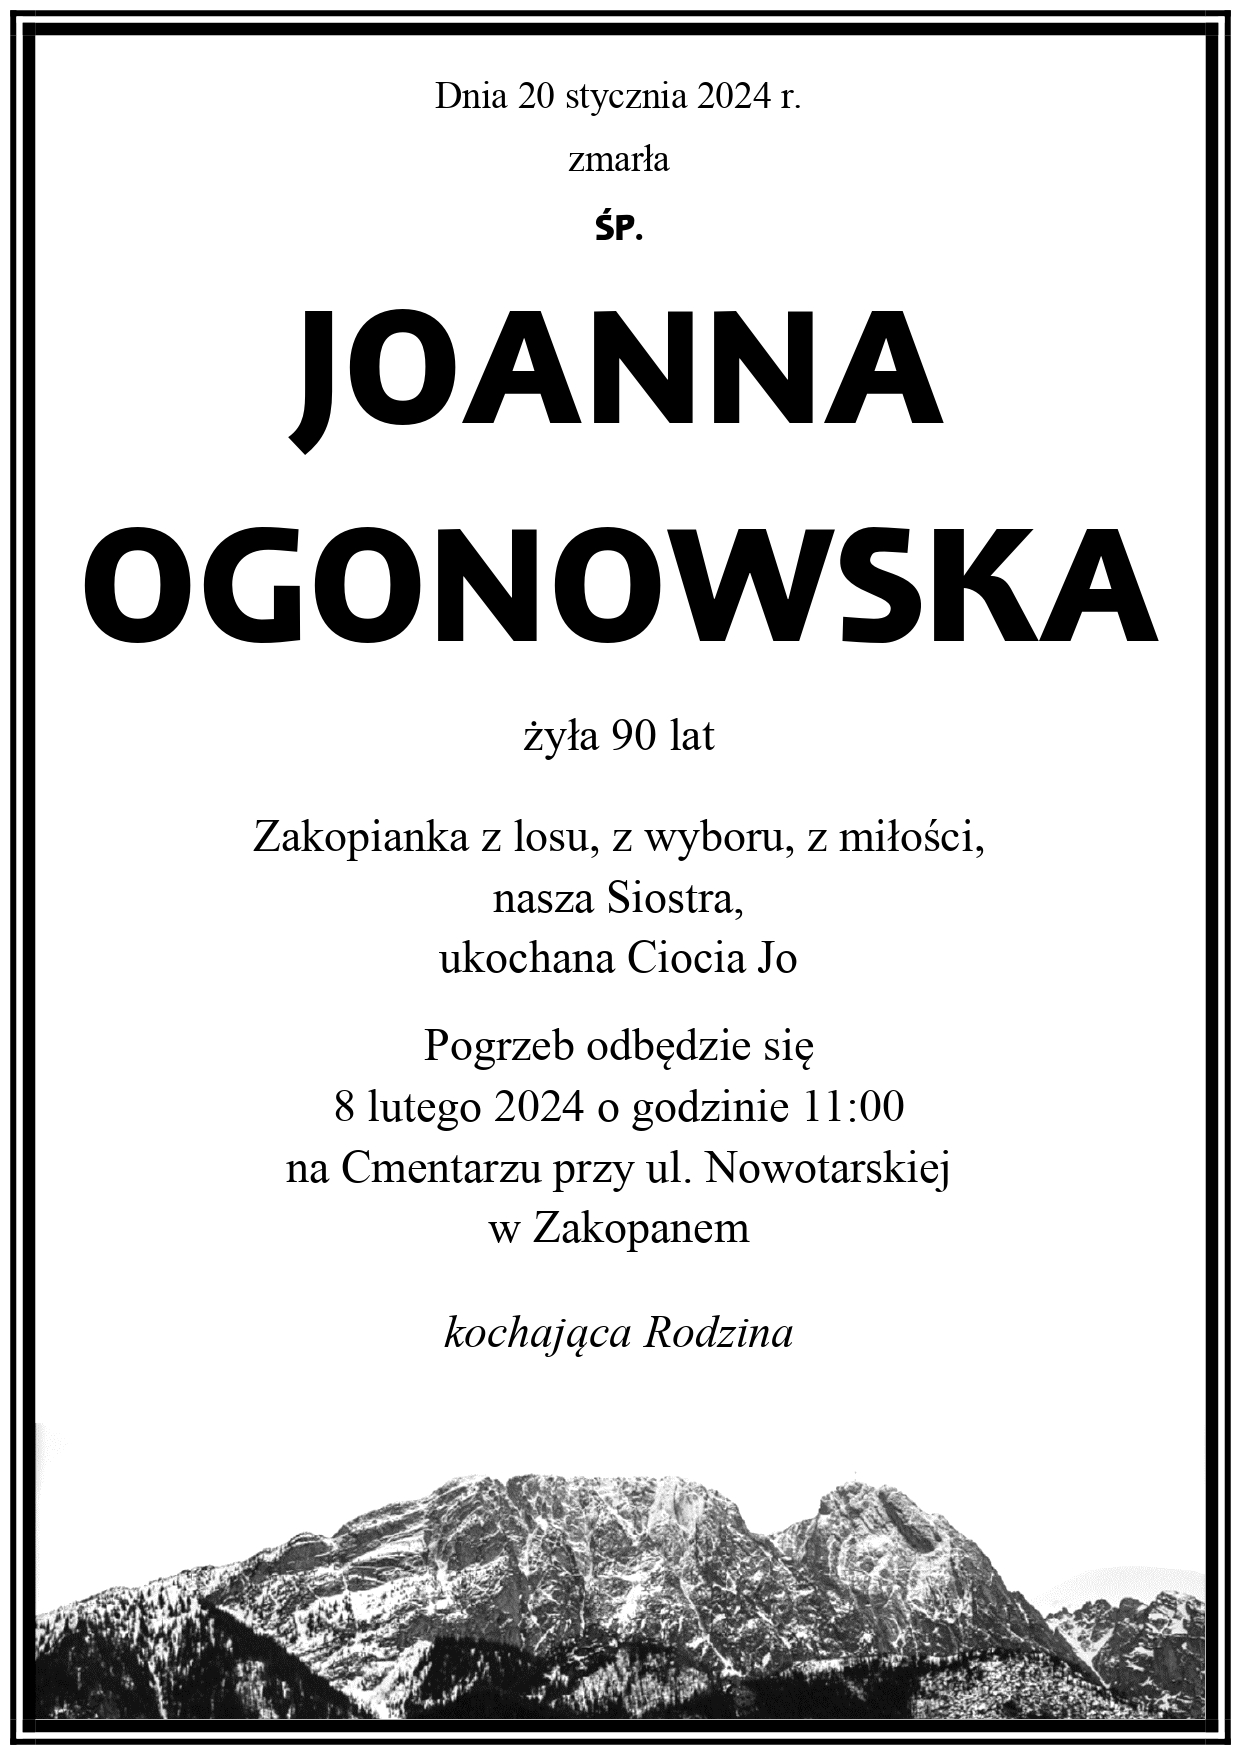 Joanna Ogonowska